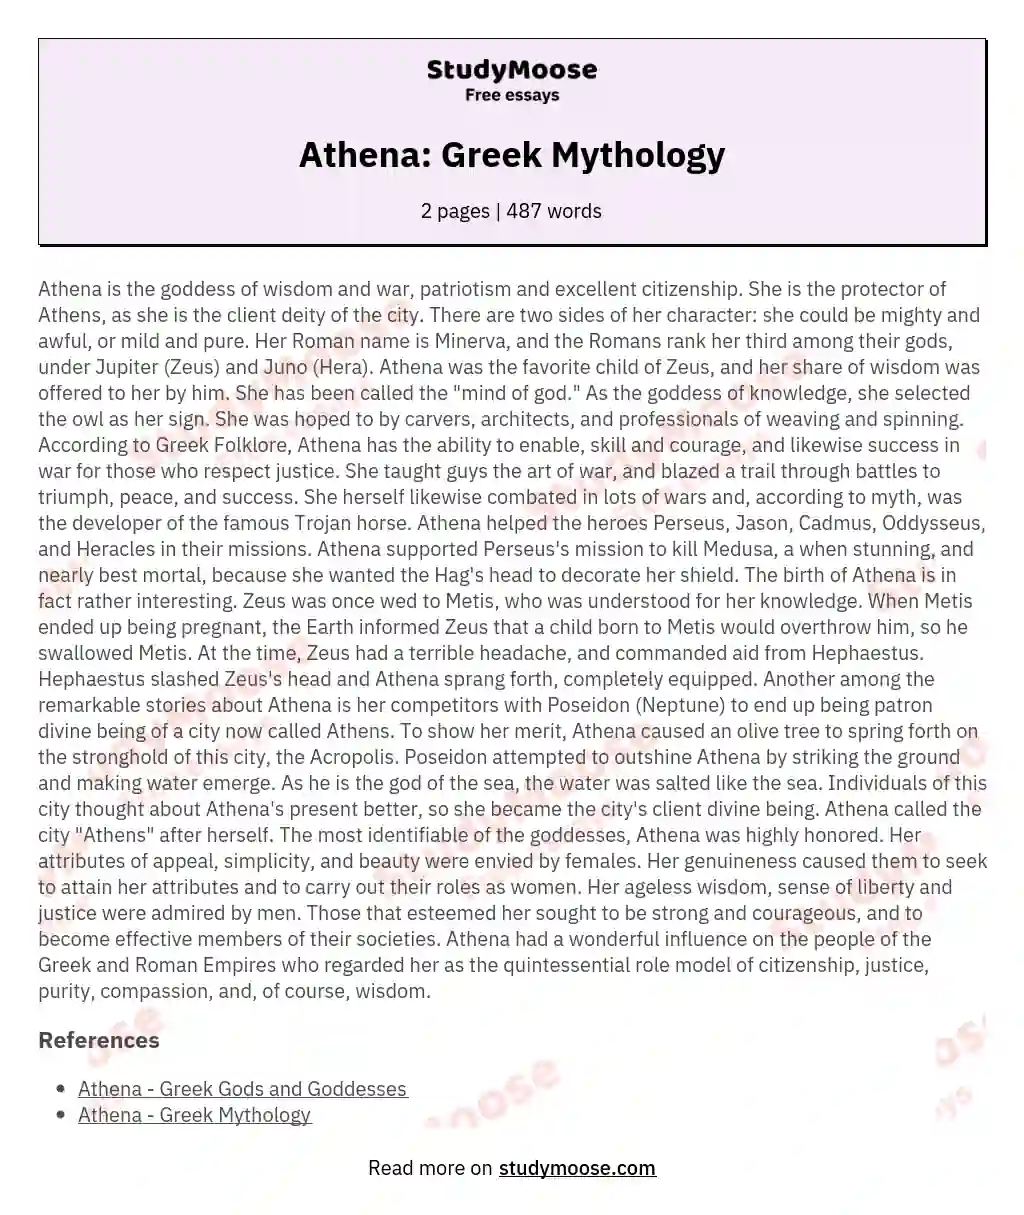 Athena: Greek Mythology essay